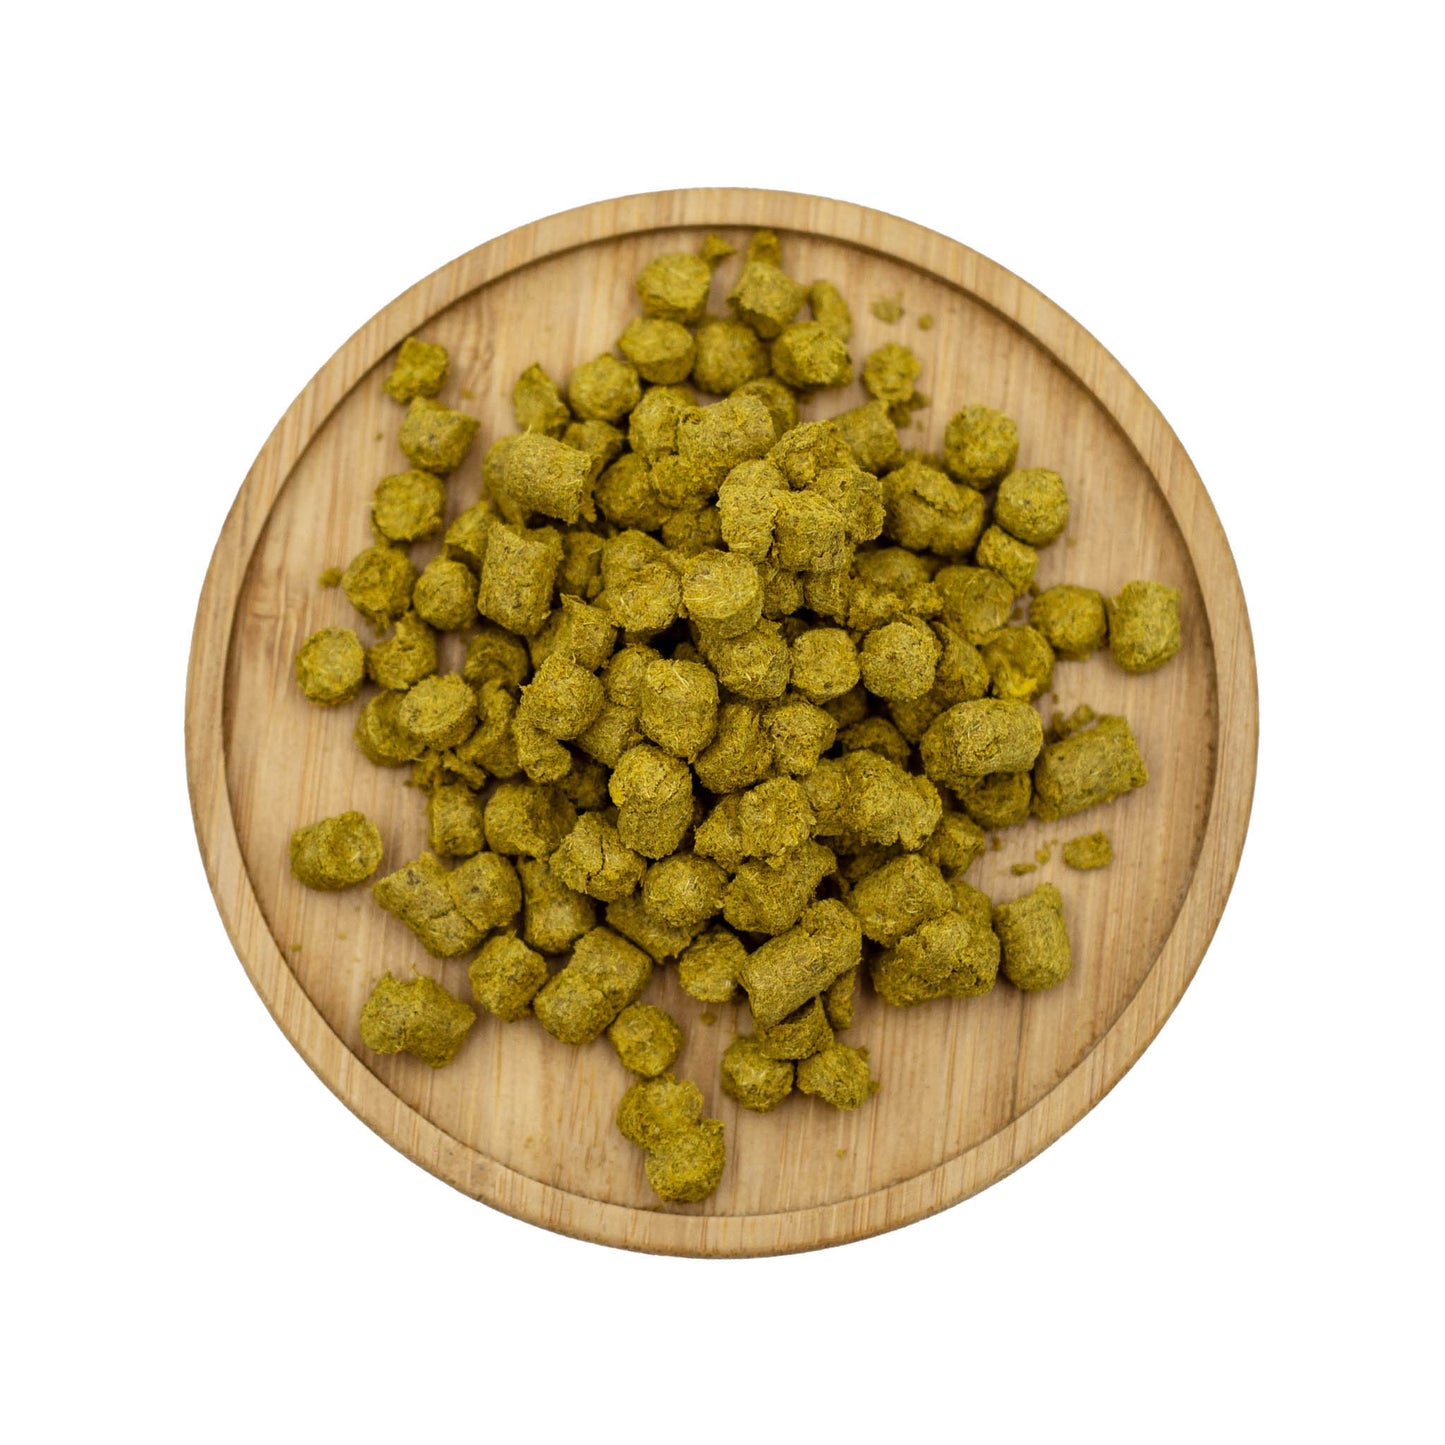 50g packet of Simcoe hop pellets for beer making